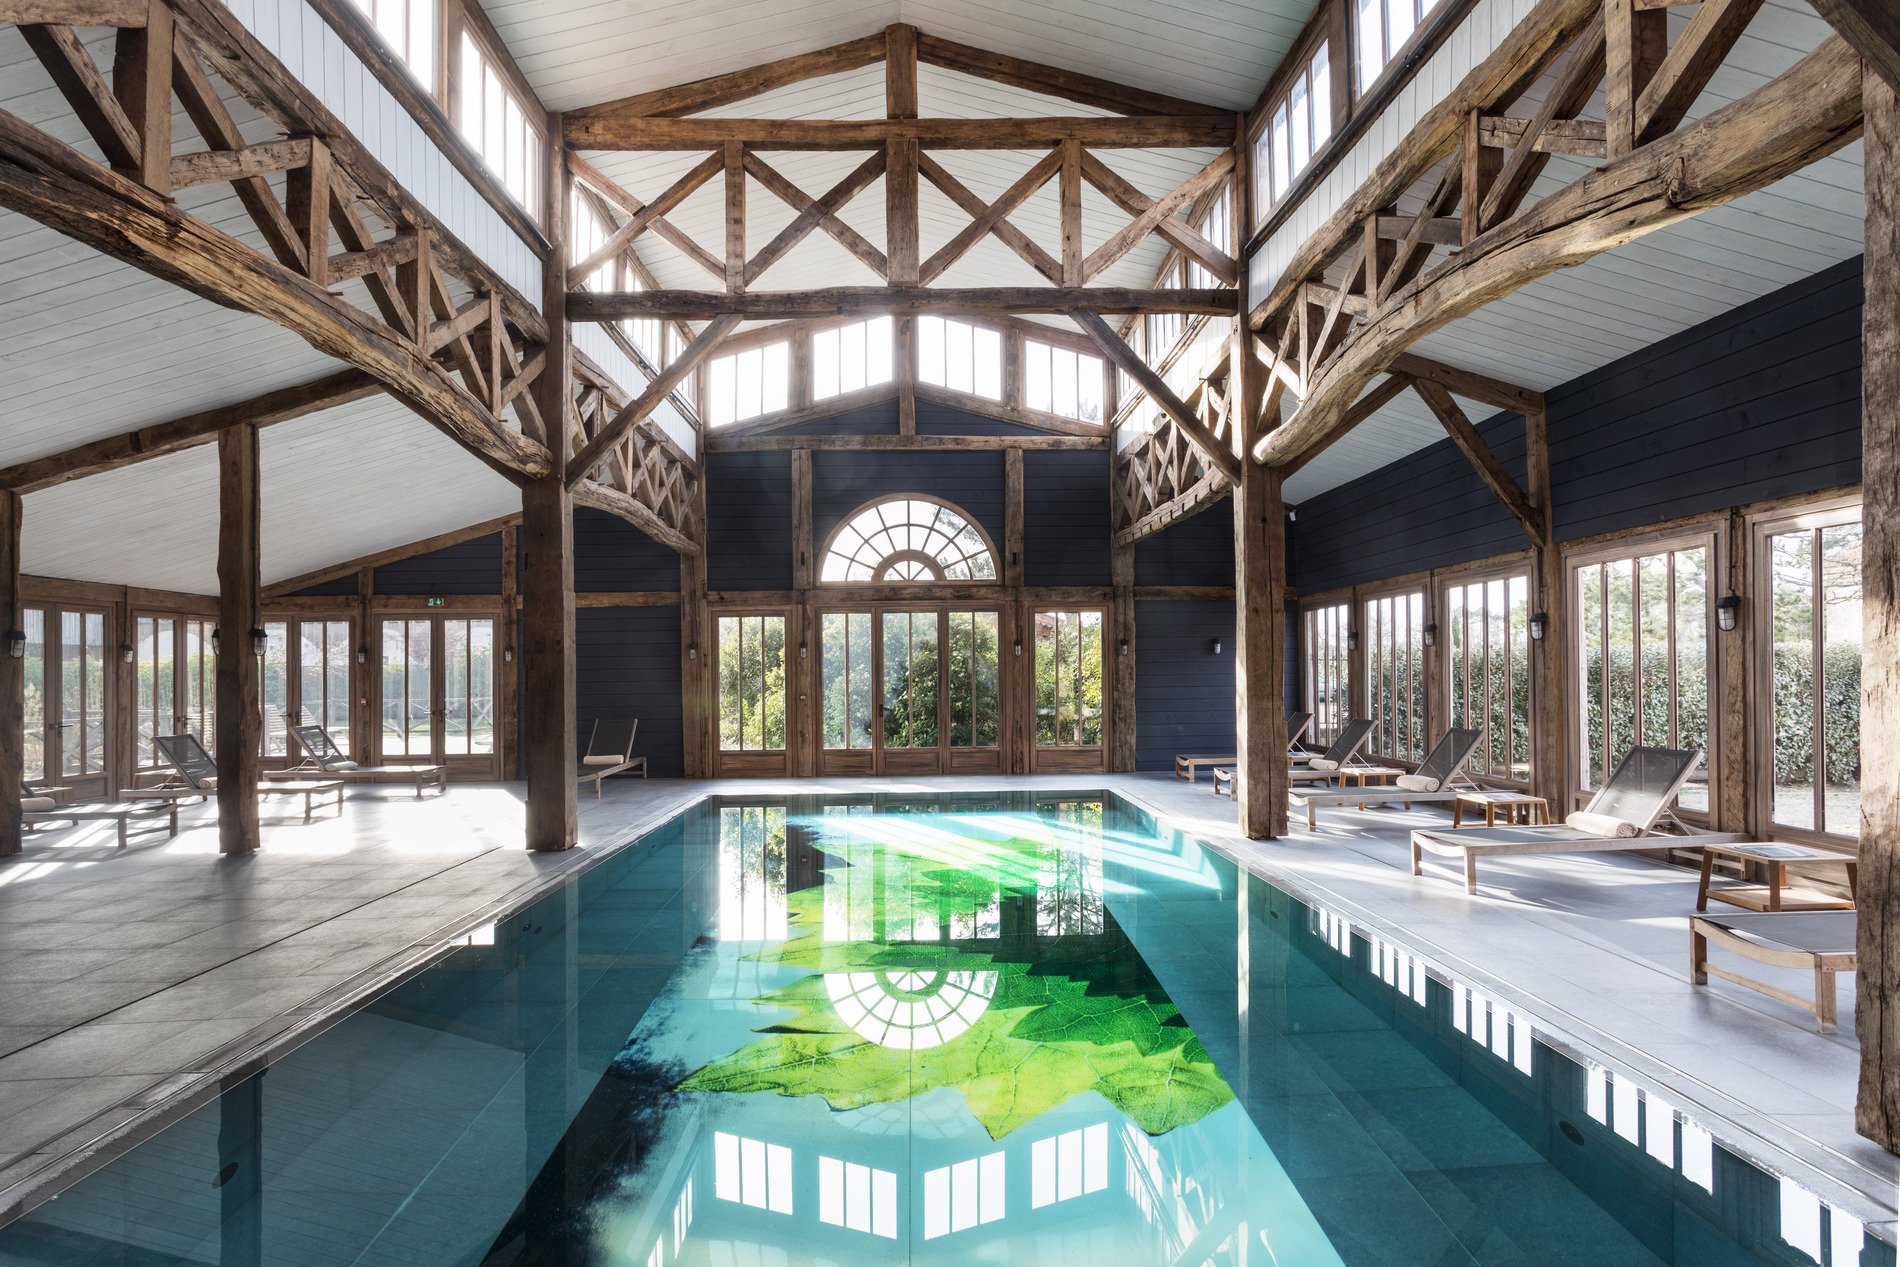 luxury hotel Les Sources de Caudalie 5 stars Martillac Bordeaux France swimming pool wellness relaxation